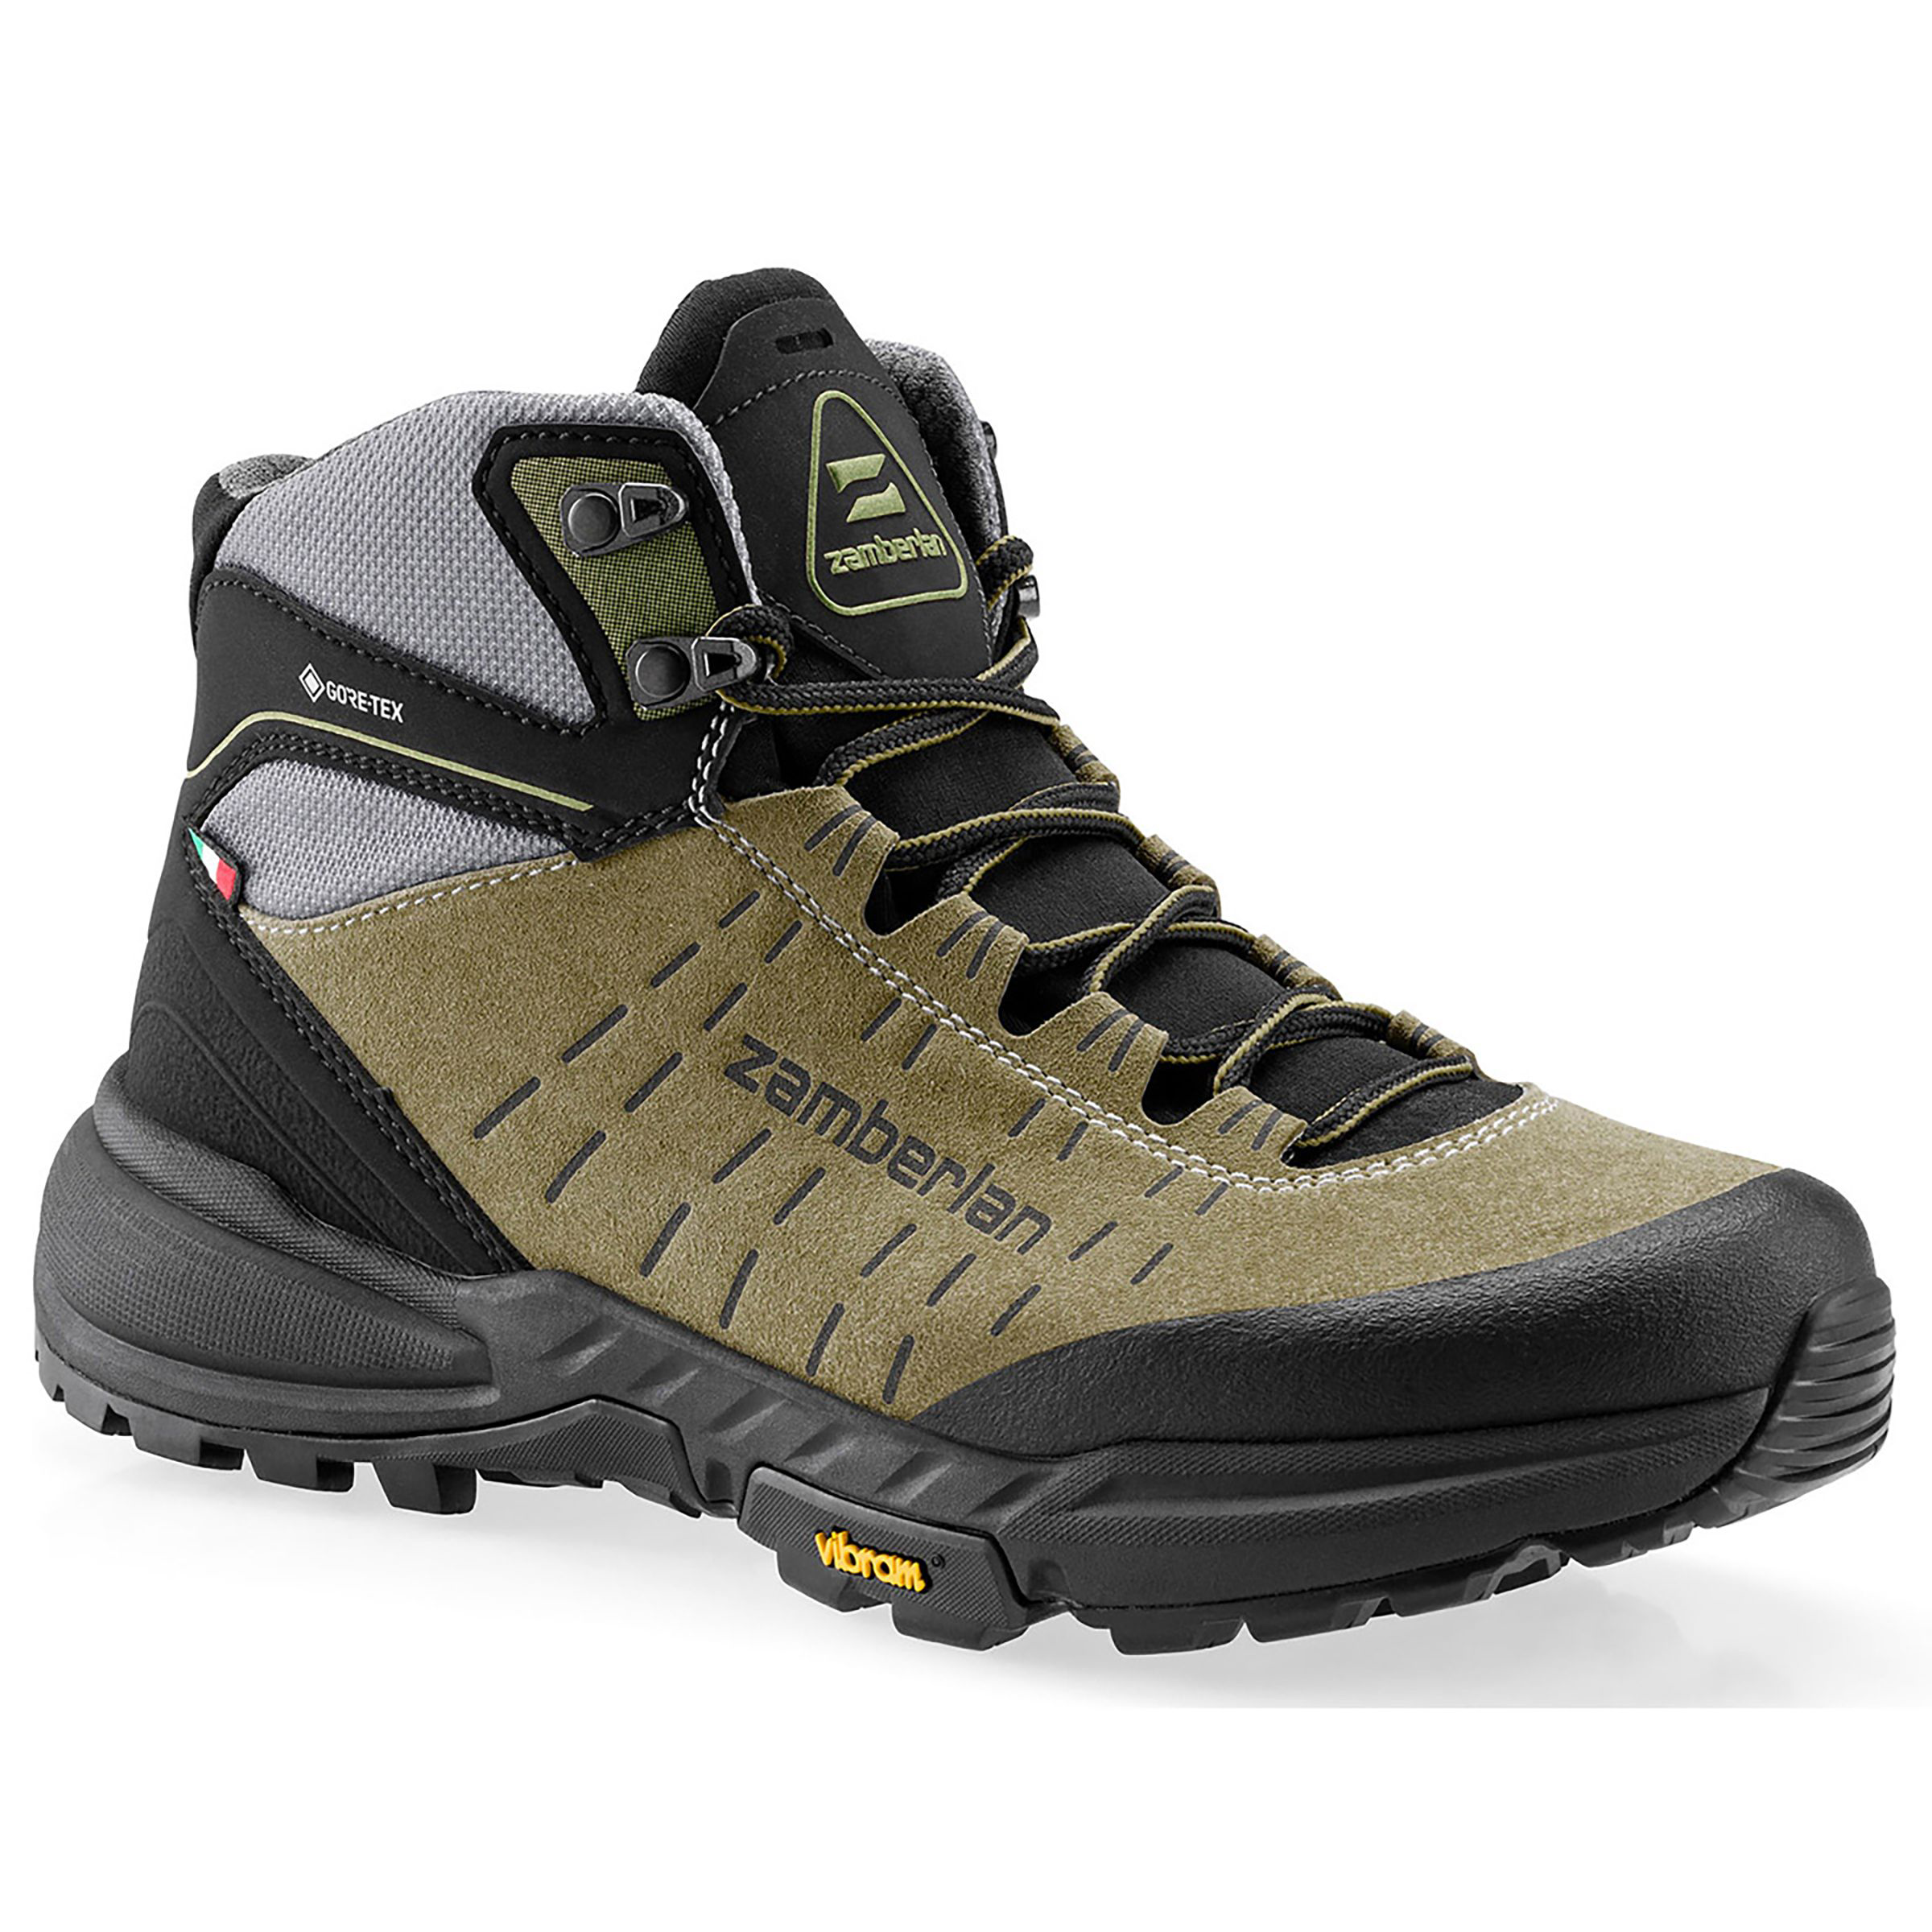 Zamberlan 334 Circe GTX Waterproof Hiking Boots for Ladies - Green - 9M